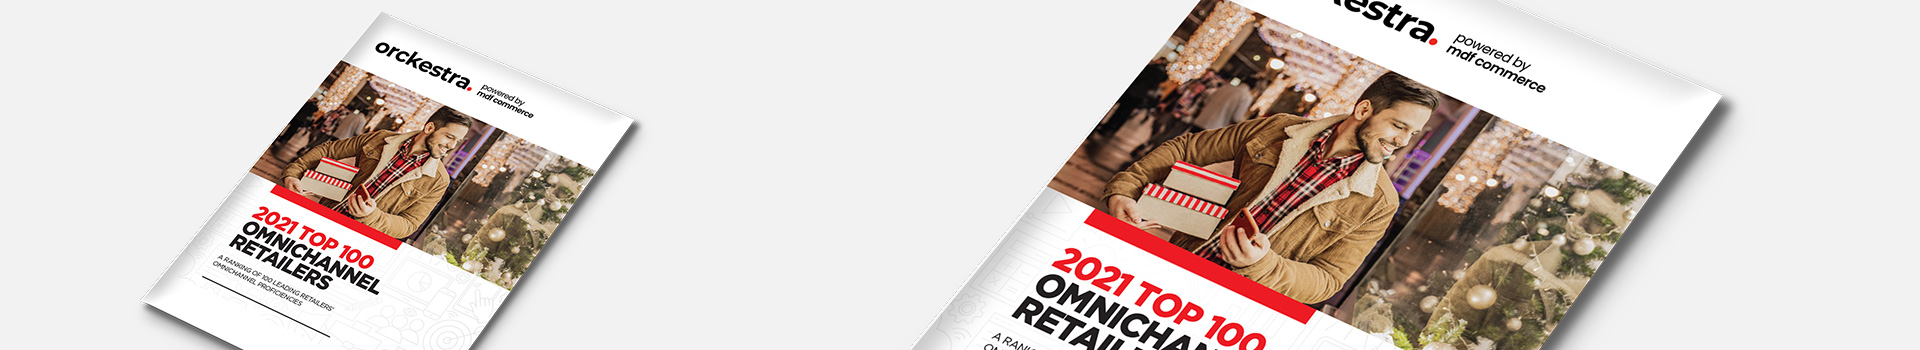 ORC-ebook-cover-Top100-banner-EN